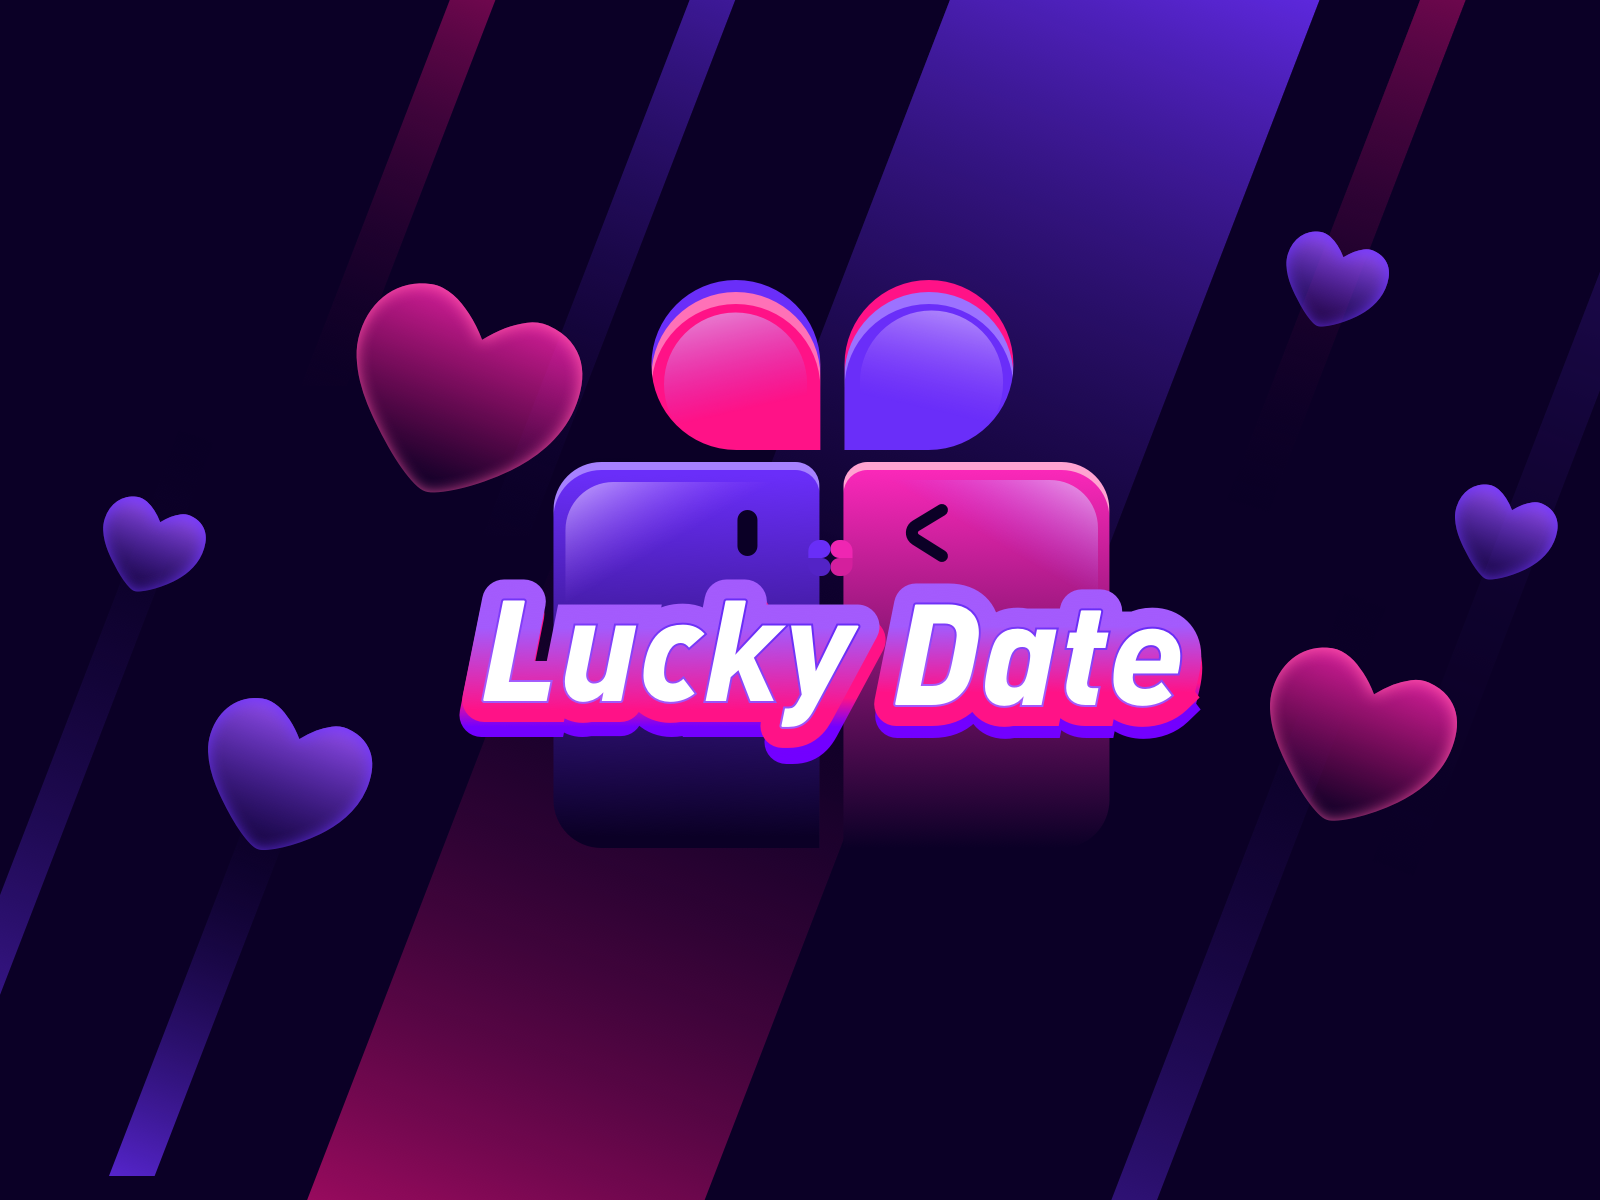 Lucky Date by wudibaobao on Dribbble